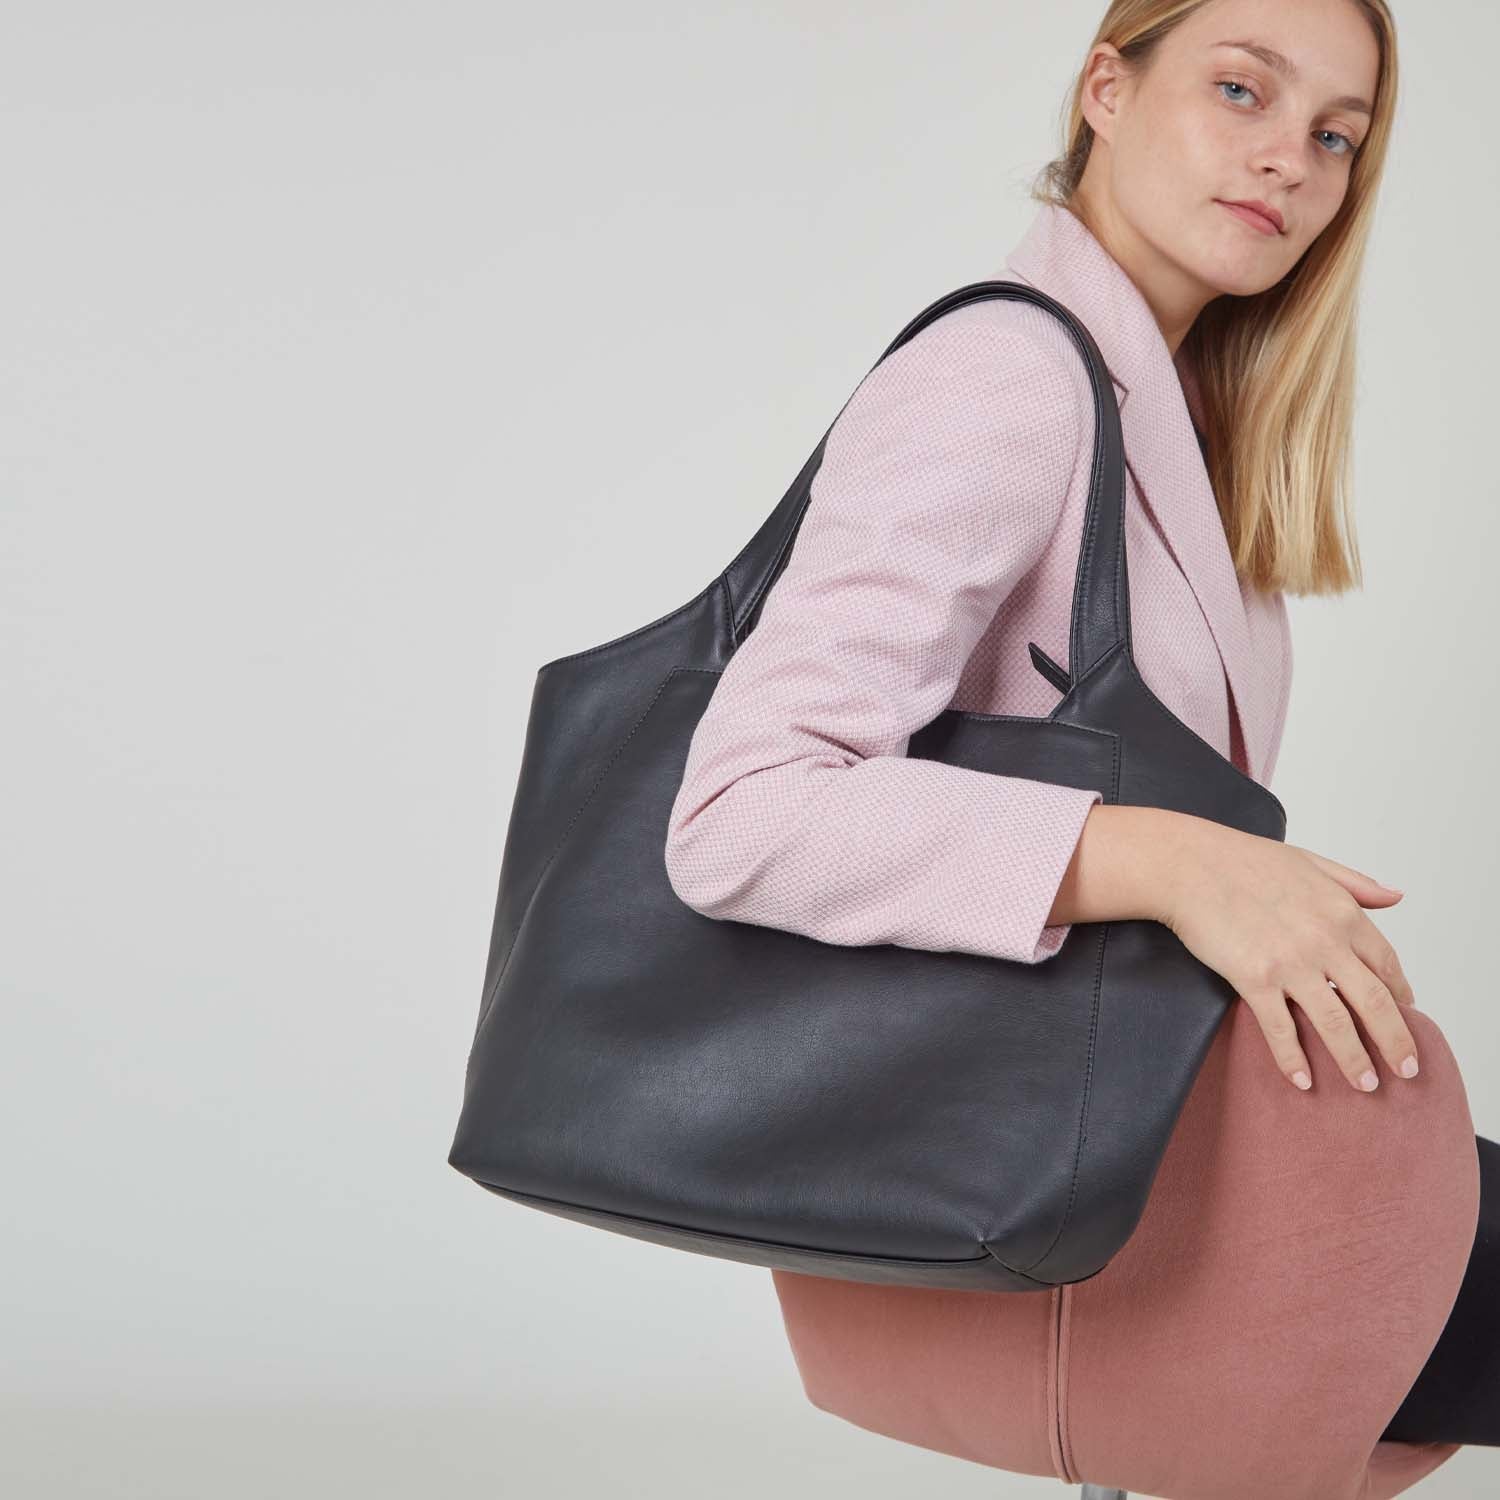 Canussa Executive Black - The bag for business women